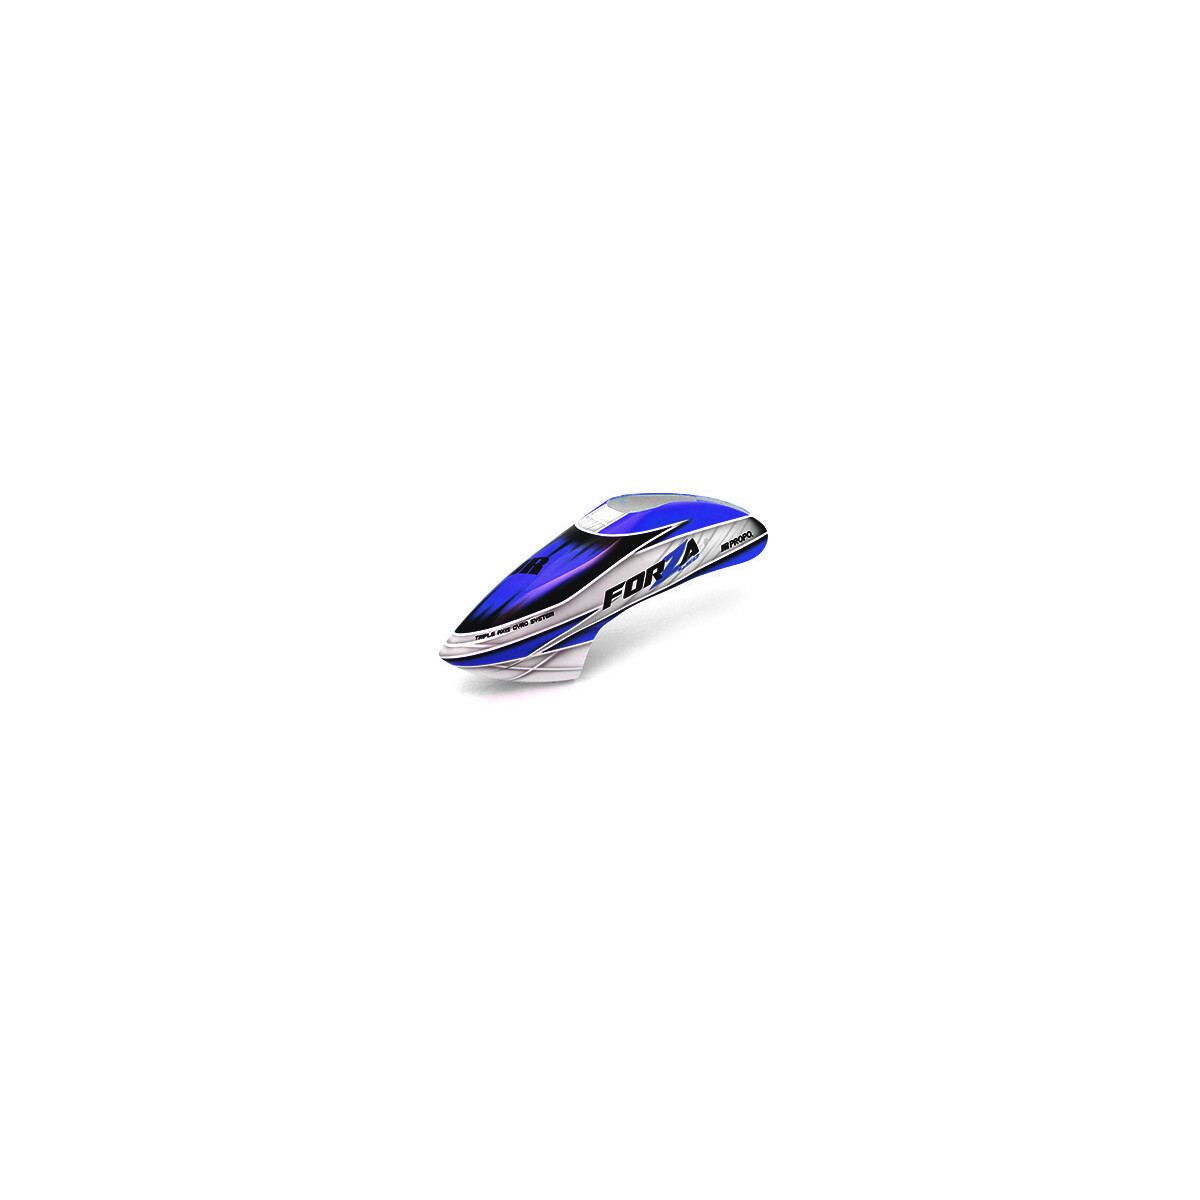 Canopy Forza450 EX blau